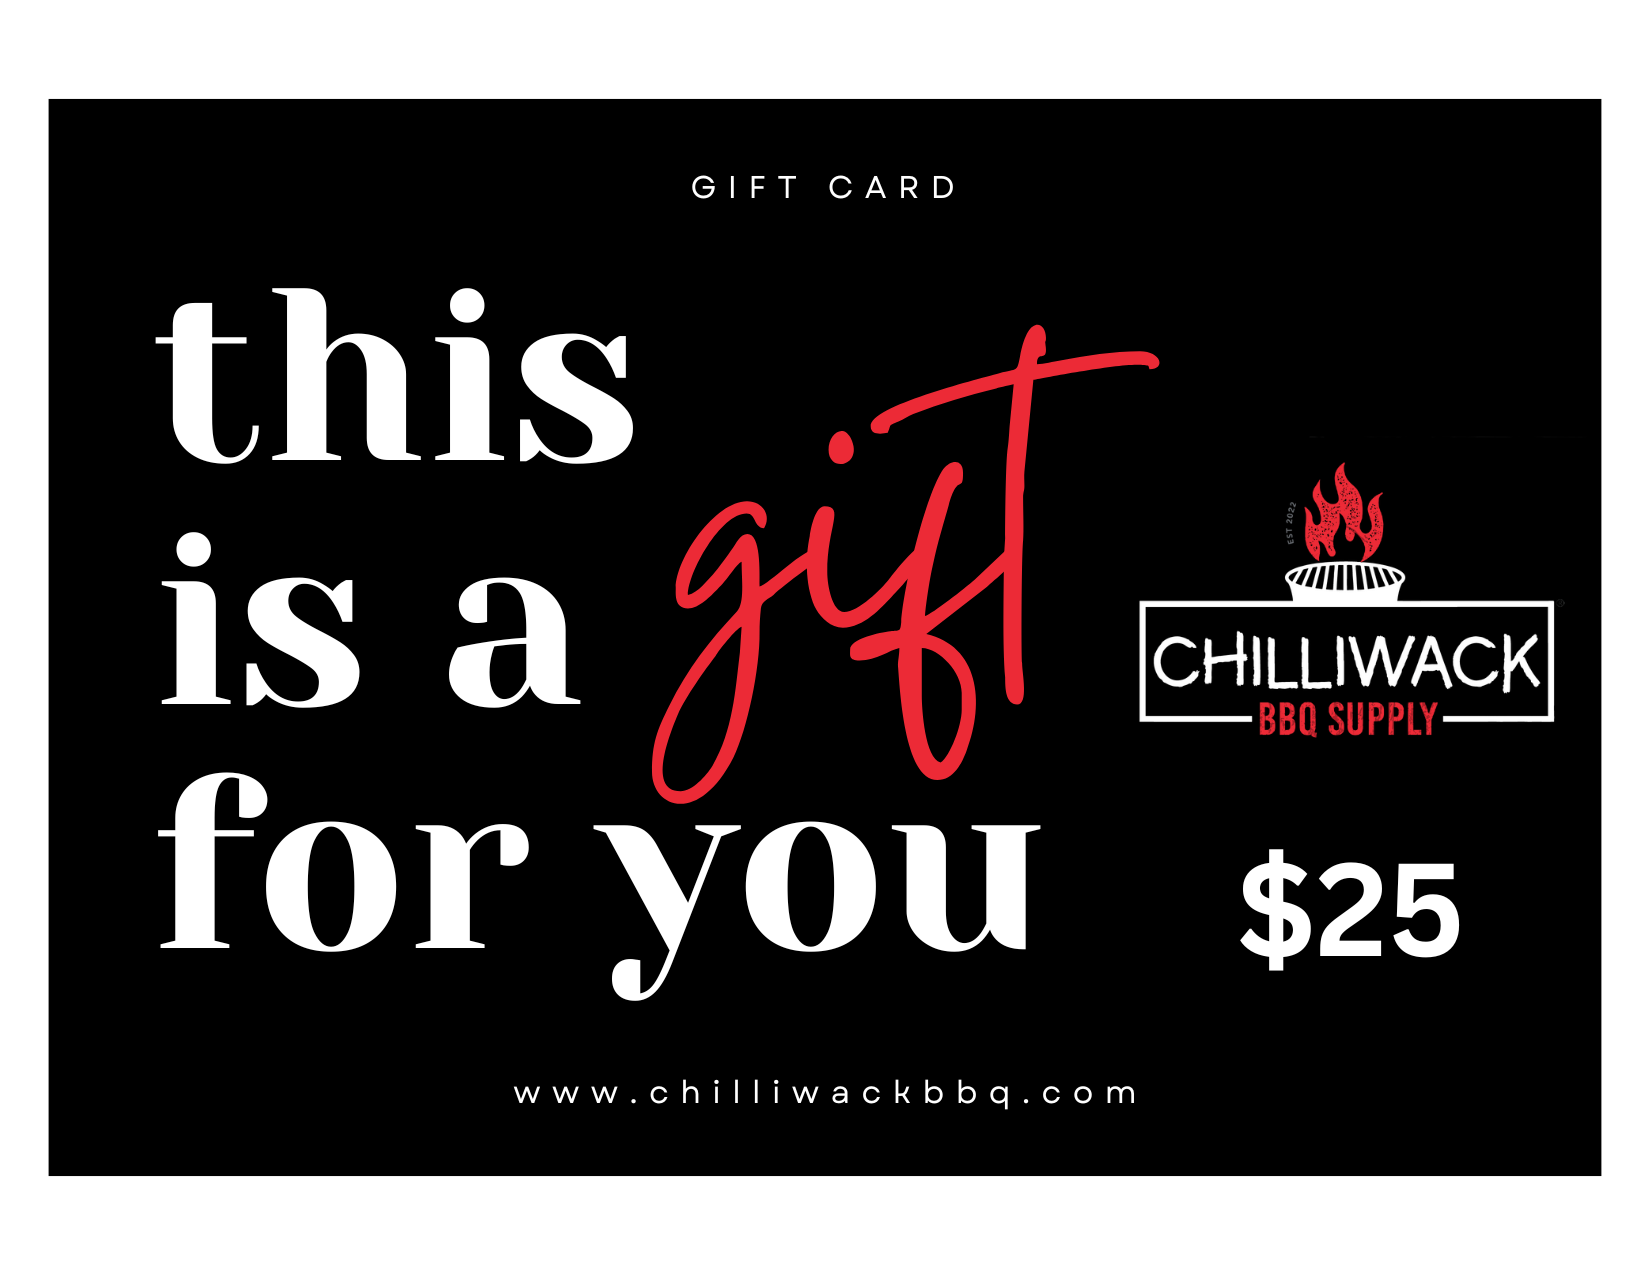 Chilliwack BBQ Supply E-GIFT CARD Chilliwack BBQ Supply Chilliwack BBQ Supply